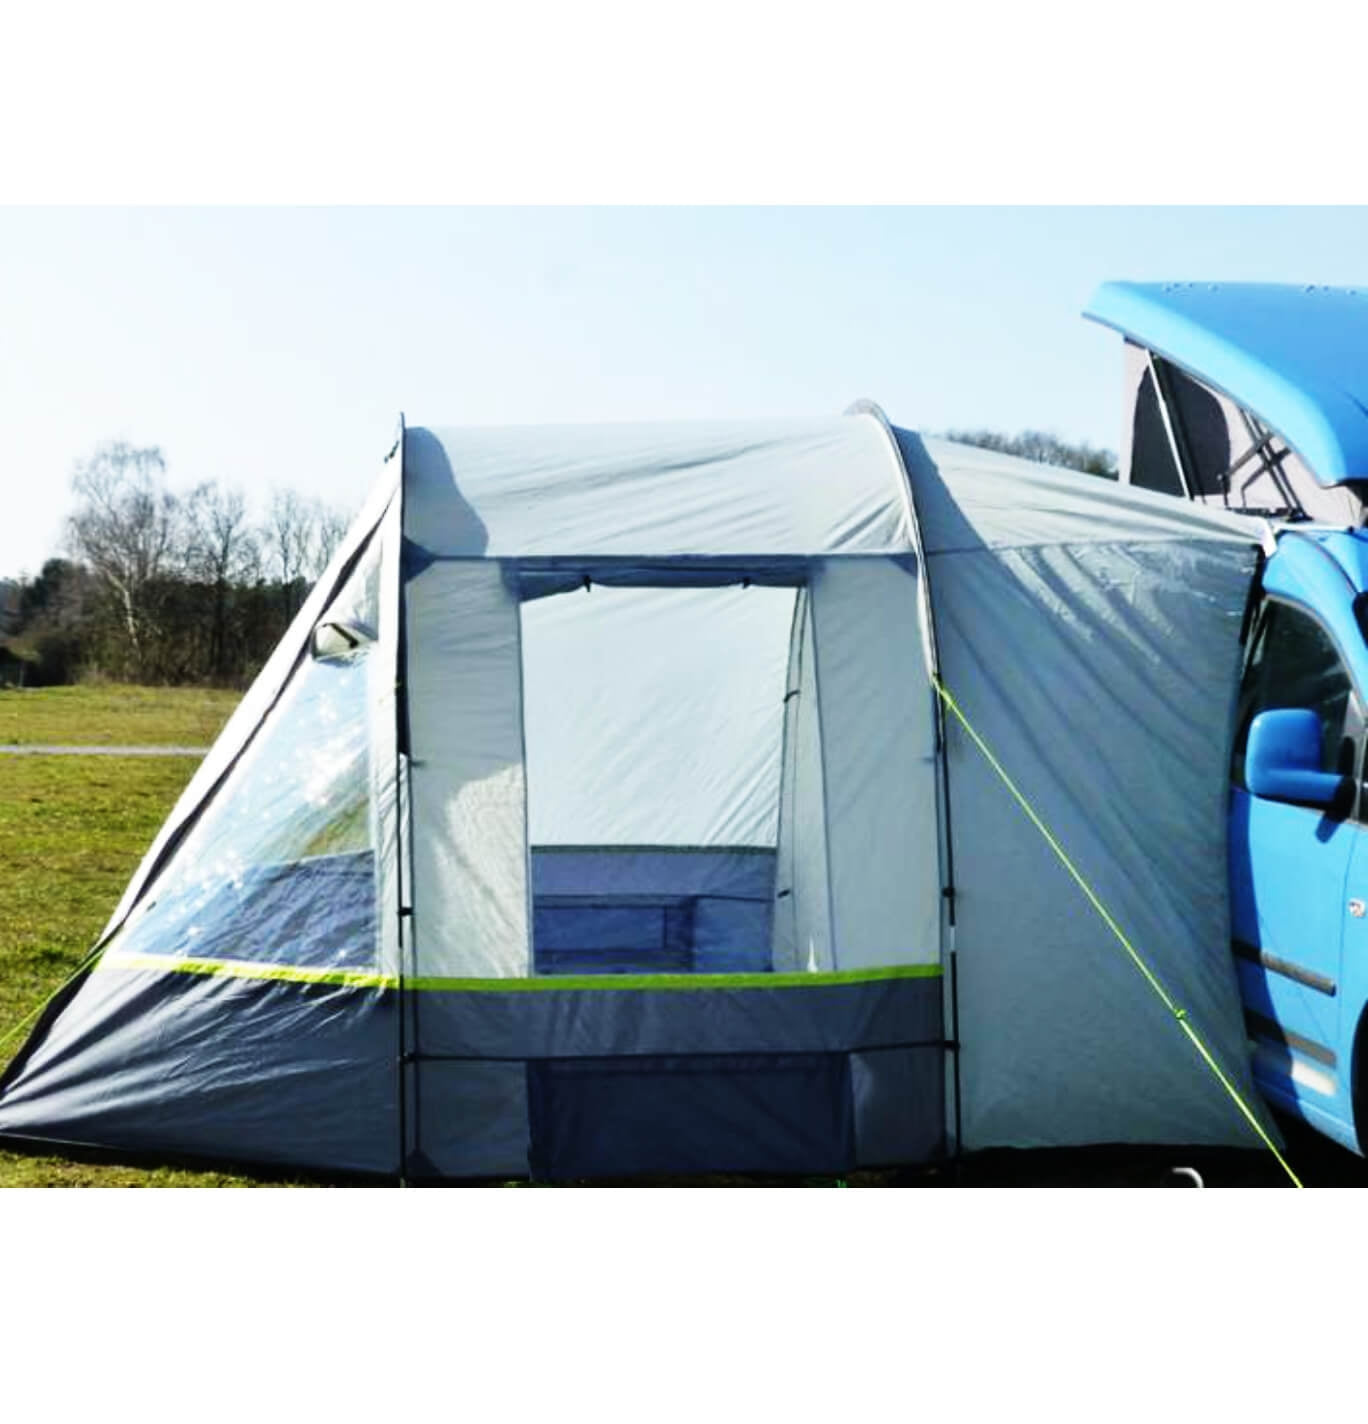 Reimo Tour Compact 2 Drive Away Awning, Inner Tent & Carpet Bundle Image